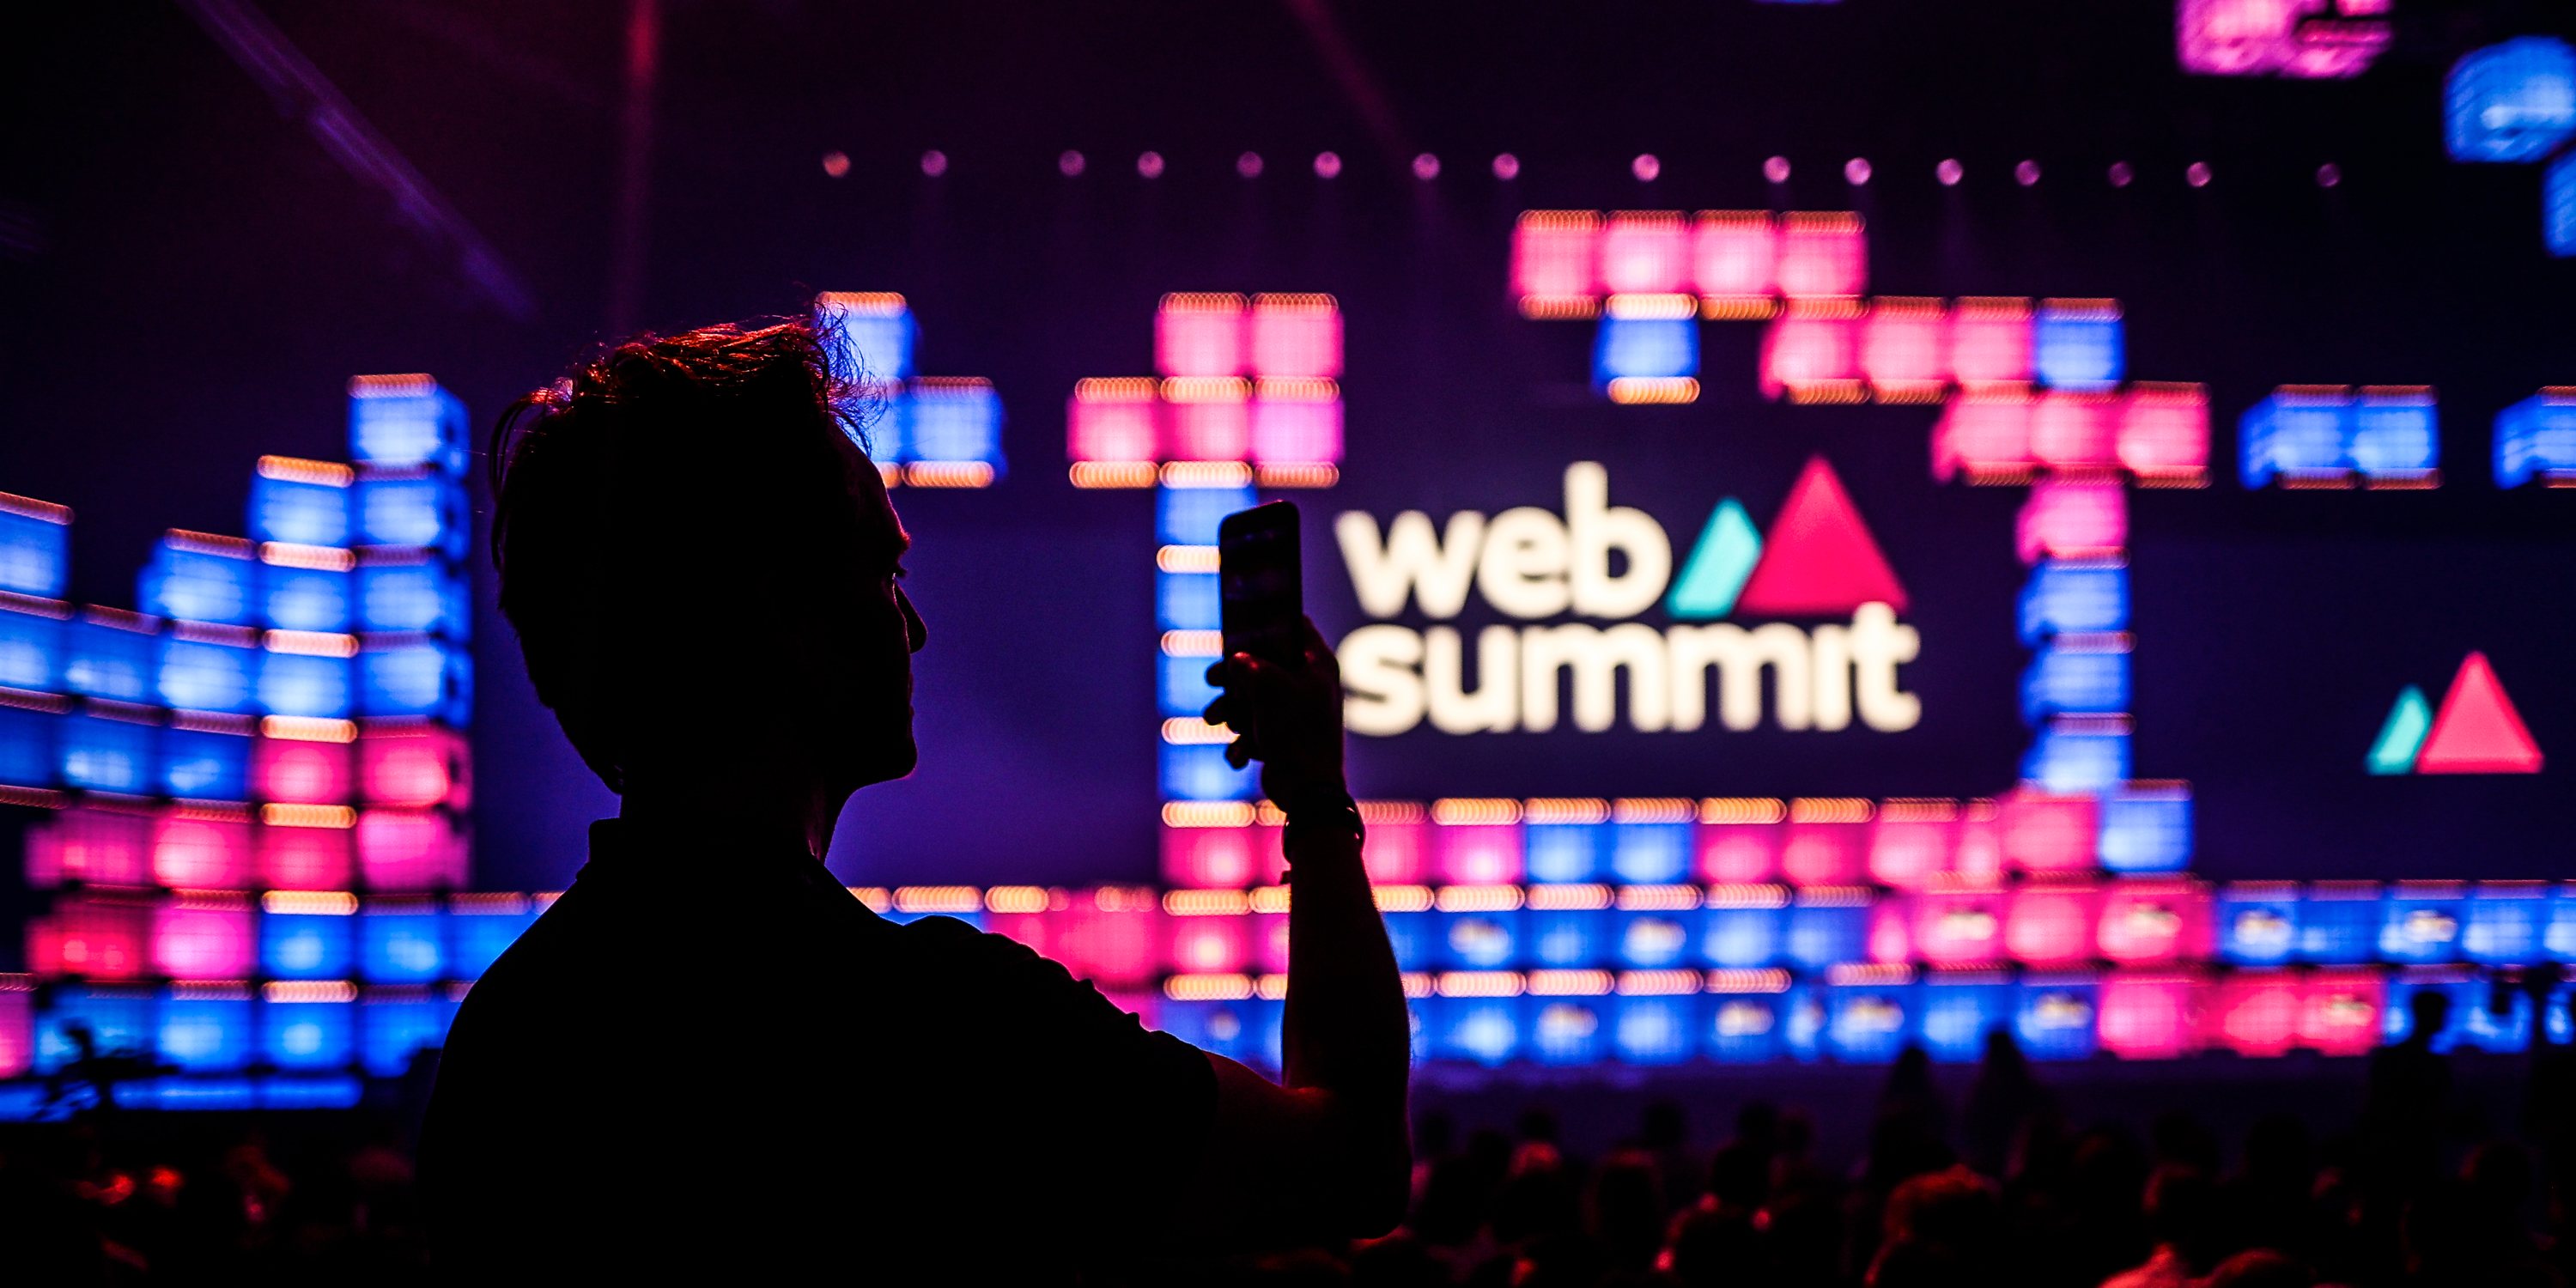 A edição deste ano da Web Summit está marcada para arrancar a 13 de novembro